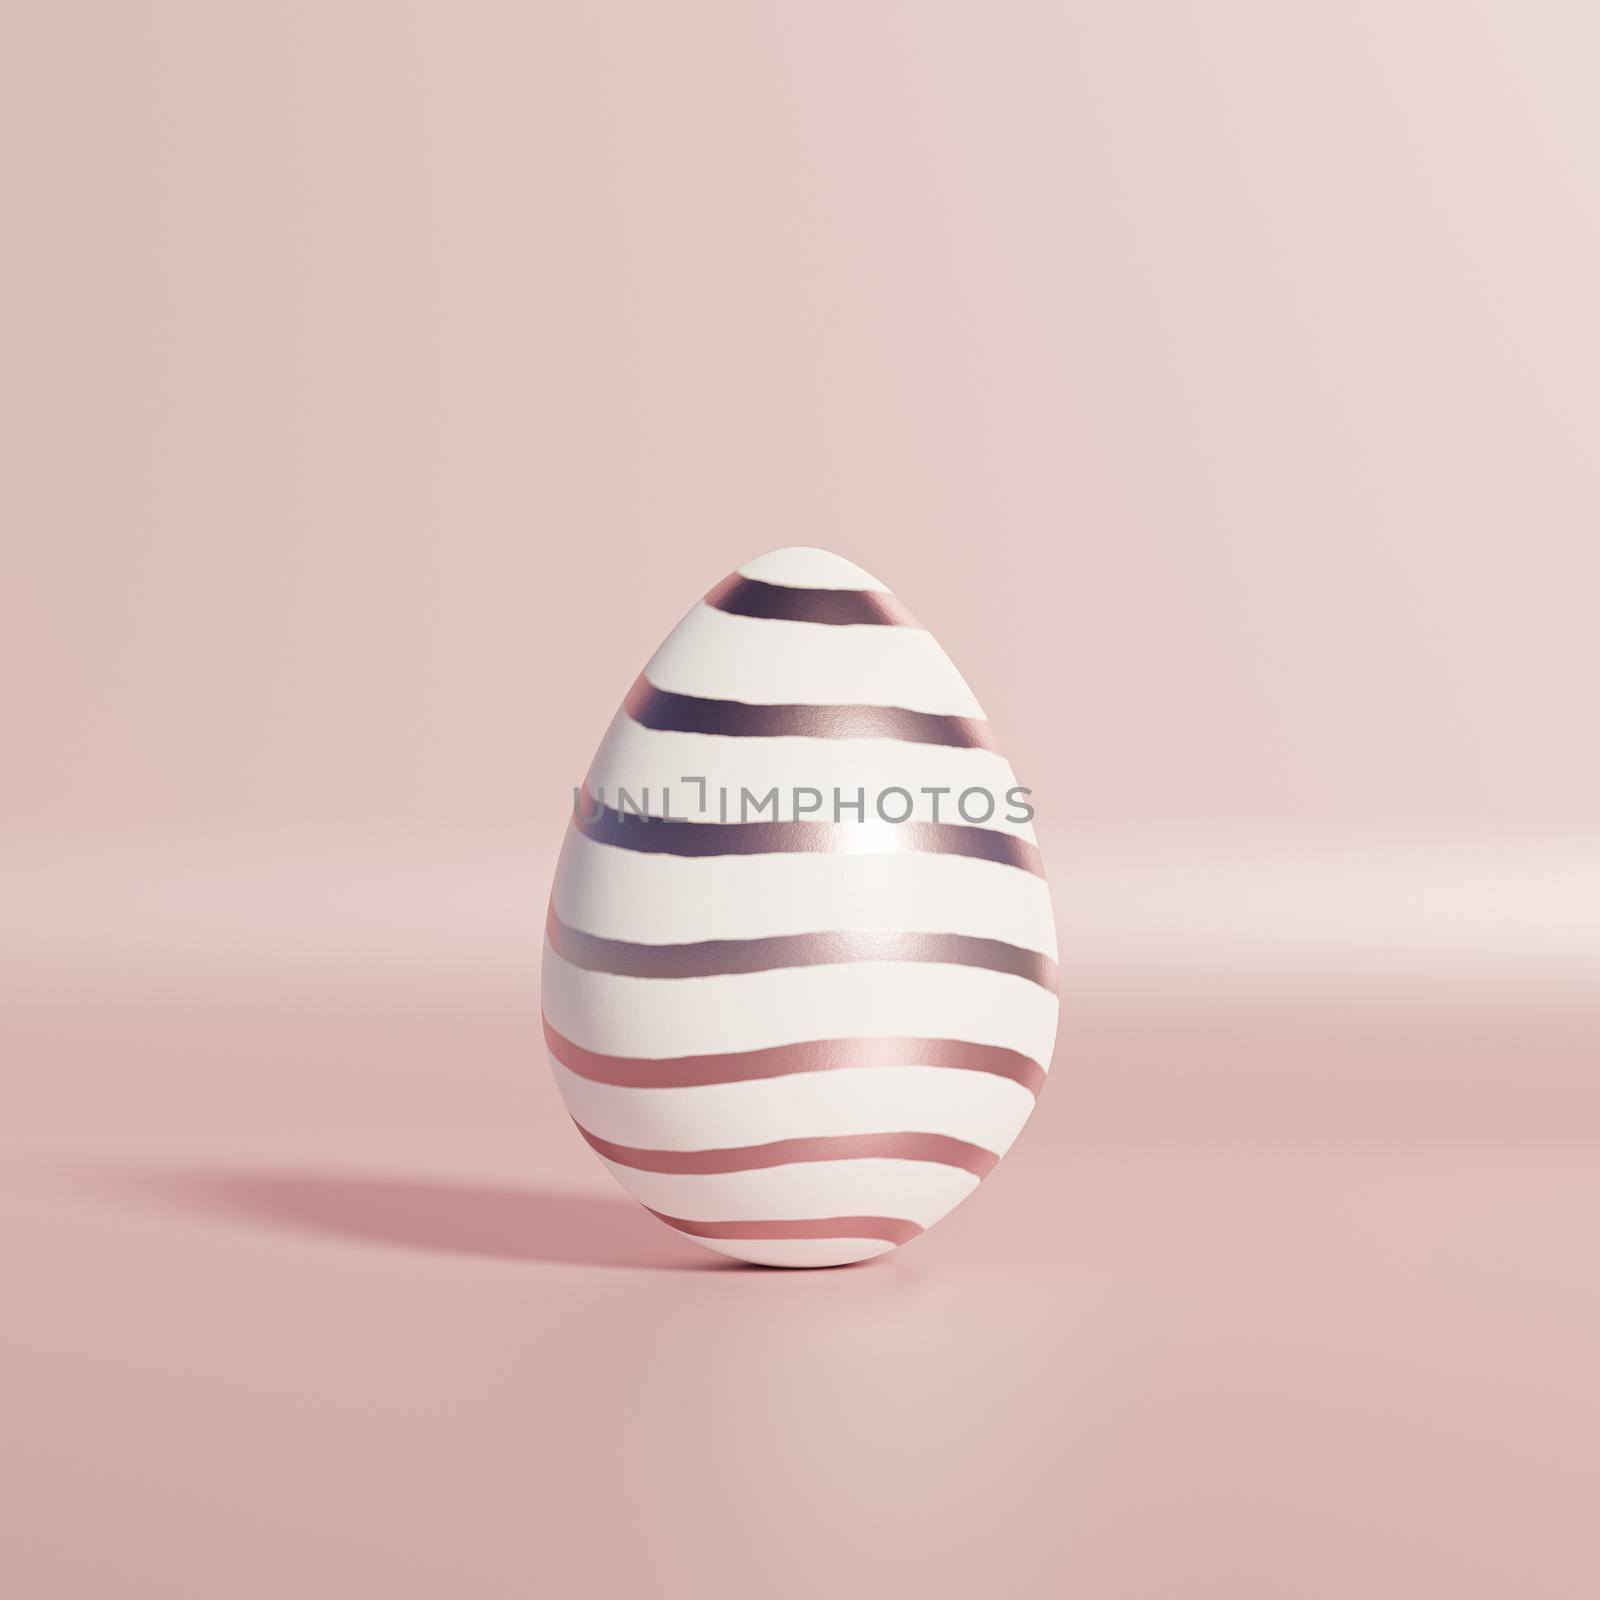 White Easter egg with rose gold striped pattern on pink background, spring April holidays card, 3d illustration render